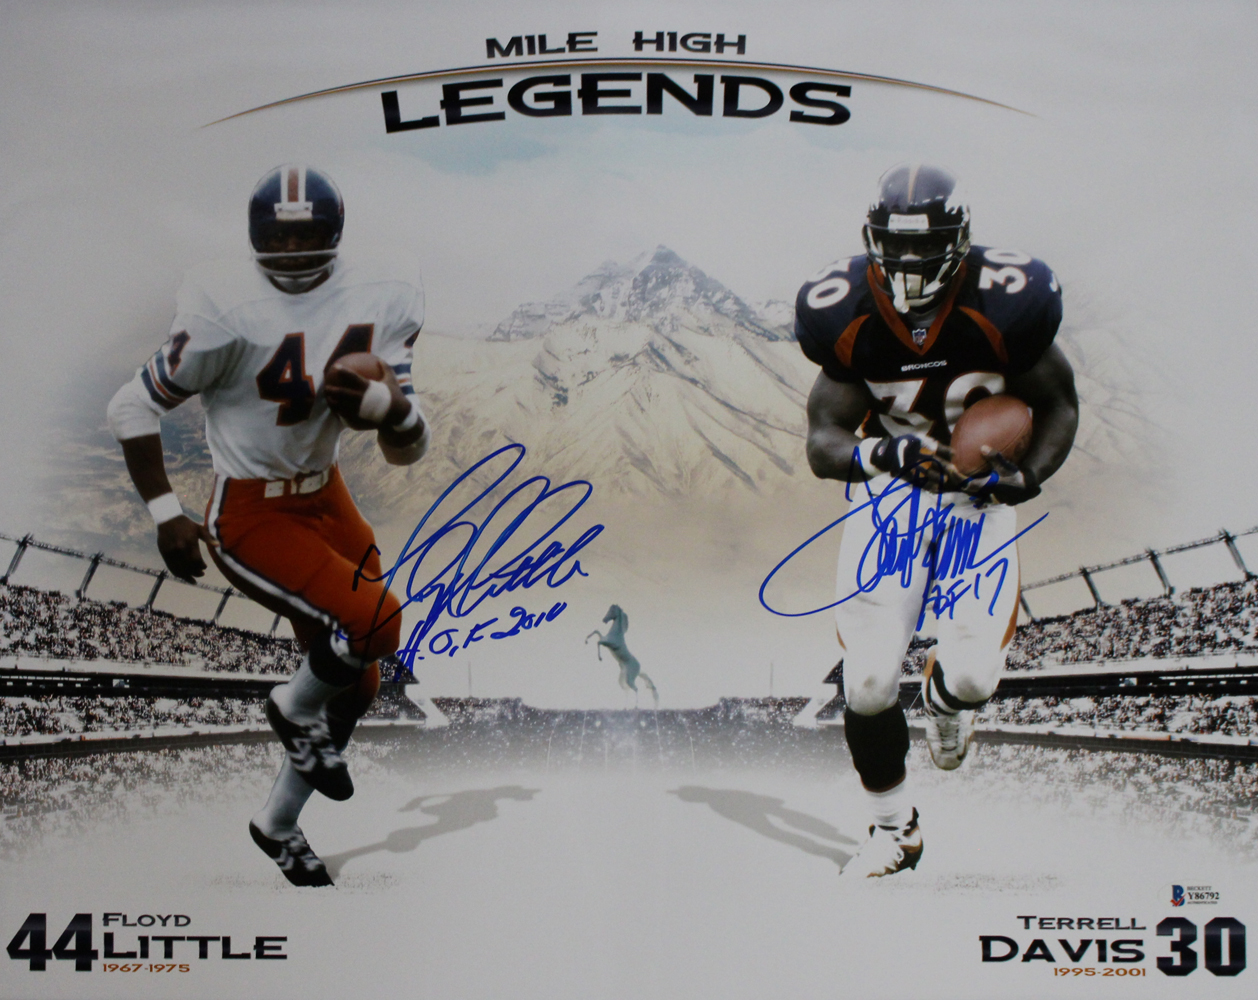 Terrell Davis & Floyd Little Signed Mile High Legends 16x20 Photo HOF BAS 32862